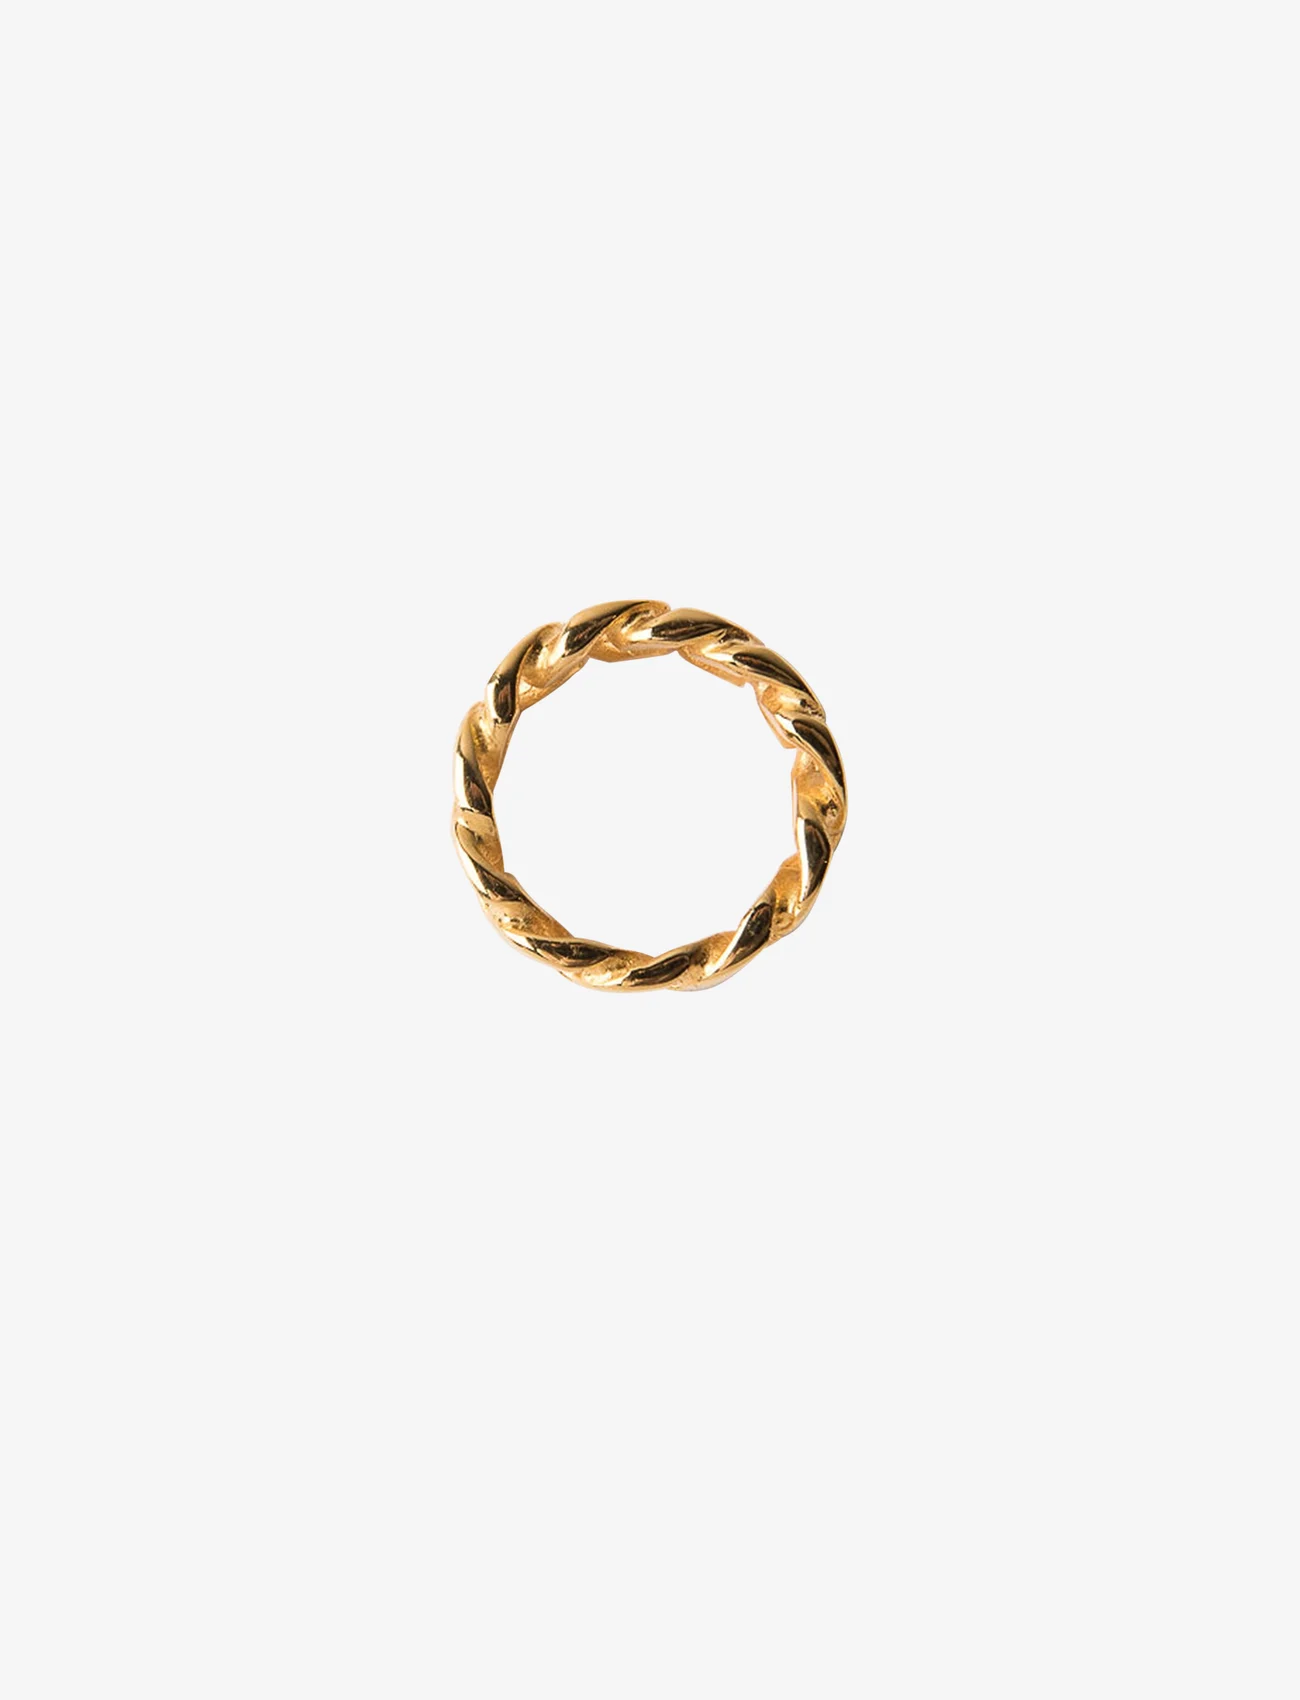 Blue Billie - chain collection ring - festmode zu outlet-preisen - gold - 1